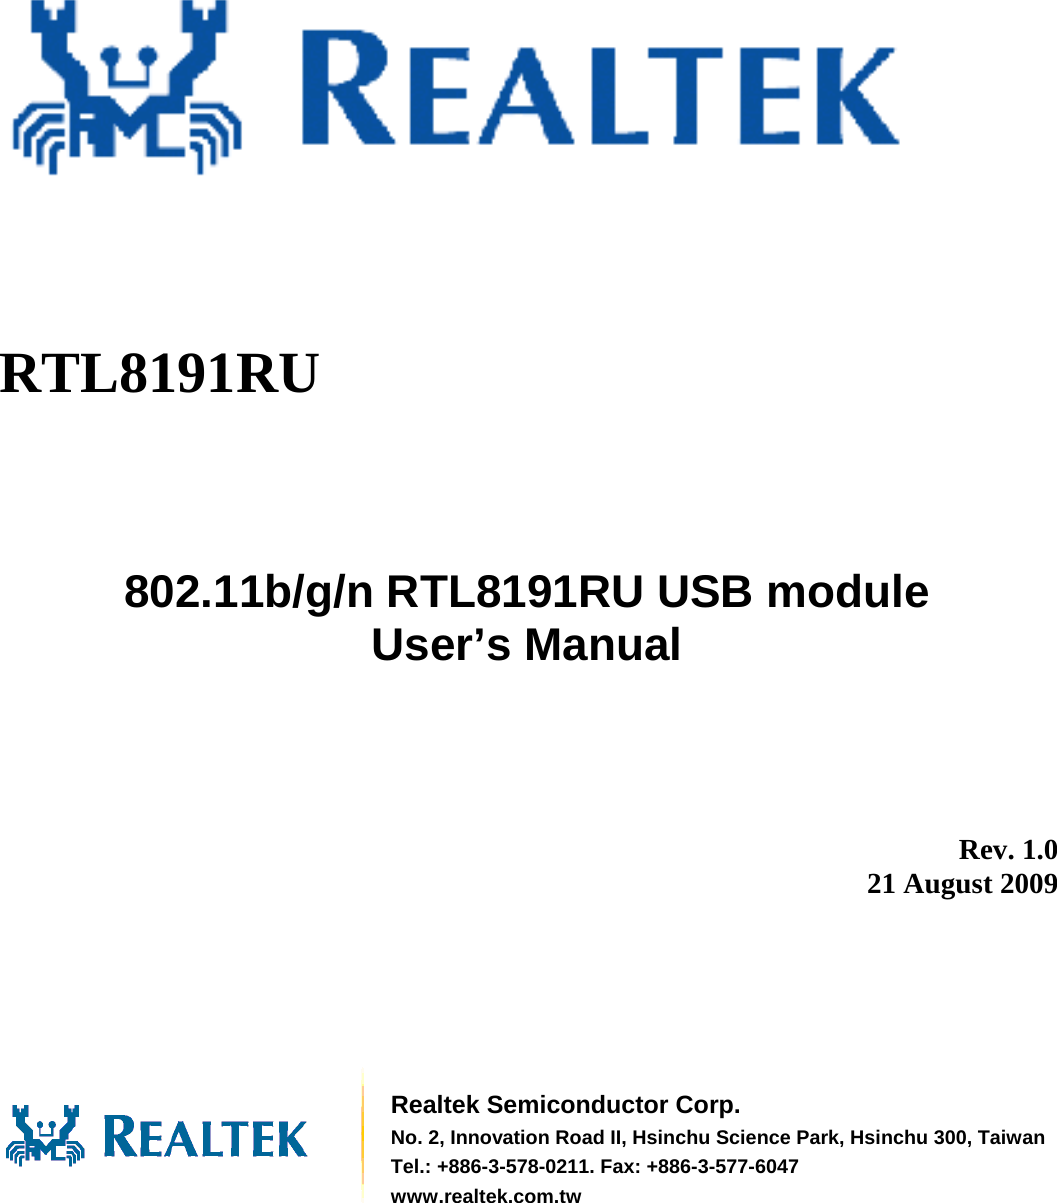           RTL8191RU       802.11b/g/n RTL8191RU USB module             User’s Manual          Rev. 1.0 21 August 2009        Realtek Semiconductor Corp. No. 2, Innovation Road II, Hsinchu Science Park, Hsinchu 300, TaiwanTel.: +886-3-578-0211. Fax: +886-3-577-6047 www.realtek.com.tw 